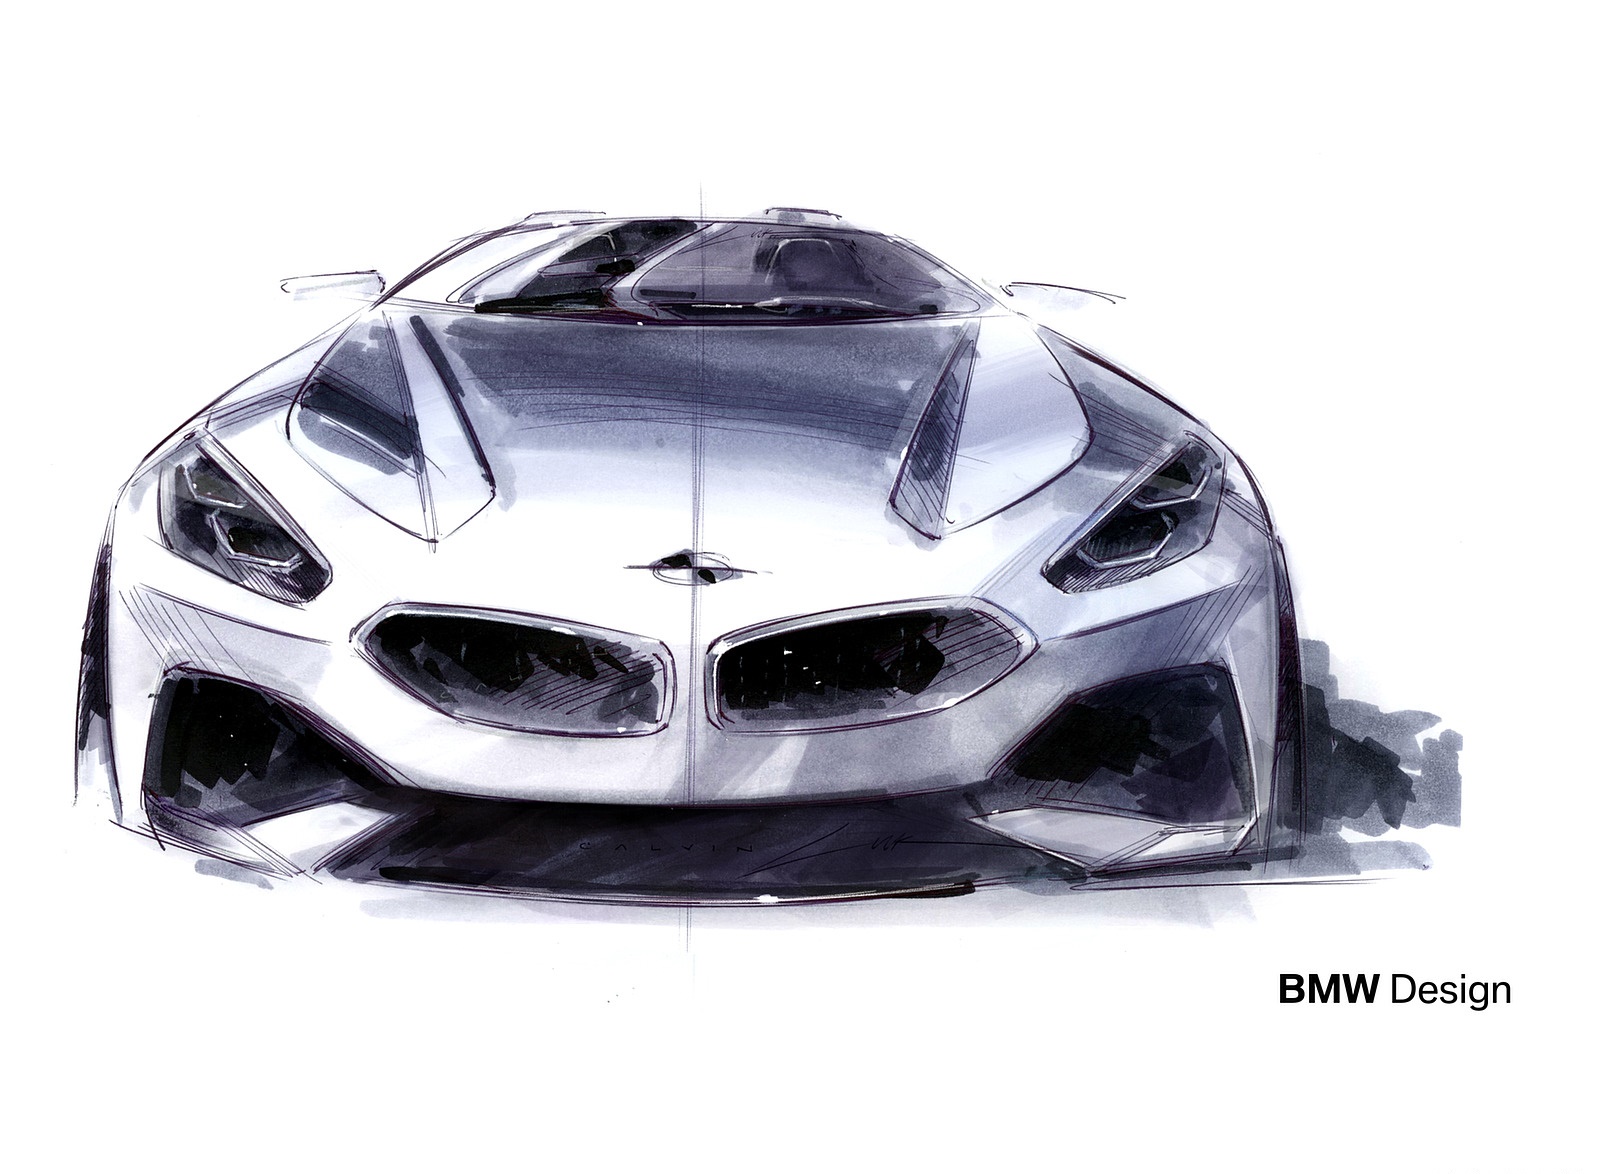 2019 BMW Z4 M40i Design Sketch Wallpapers #85 of 87